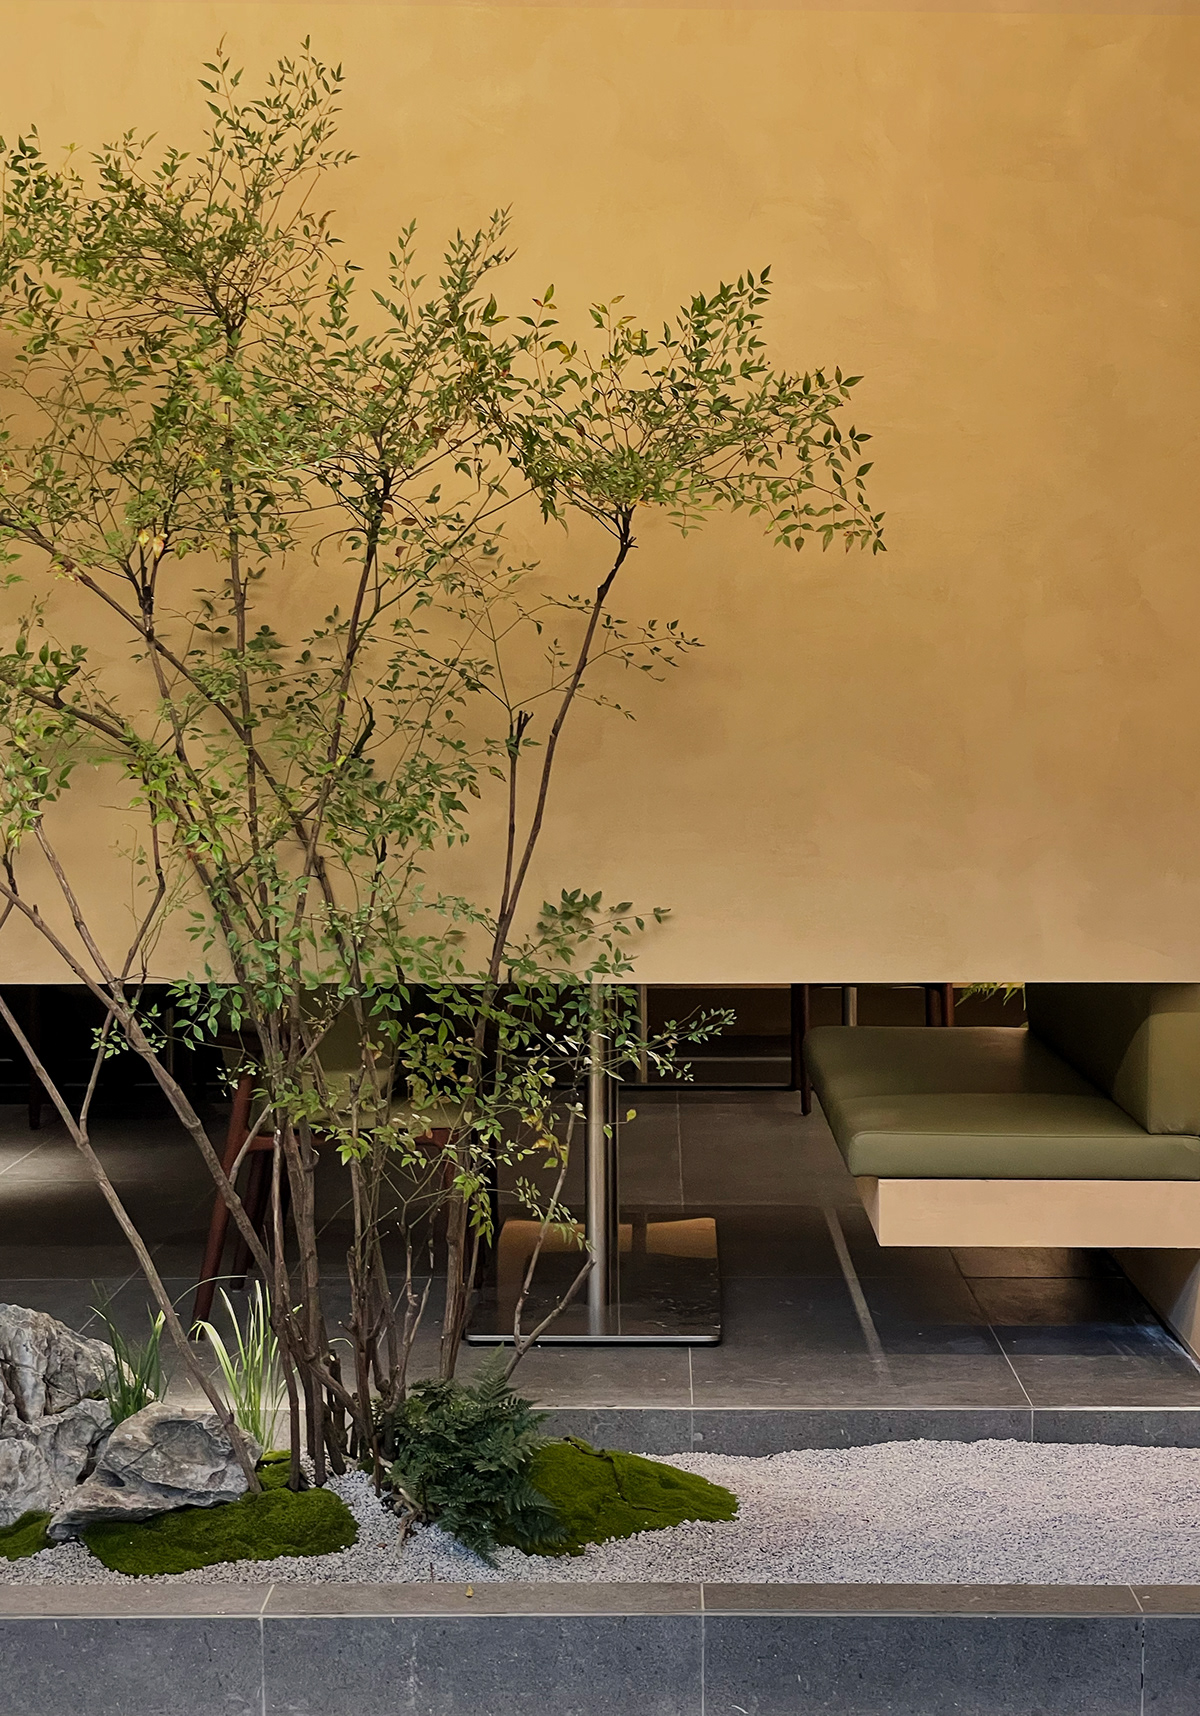 commercial interior design  restaurant Shenzhen teppanyaki 室内设计 深圳 空间设计 铁板烧 餐厅设计